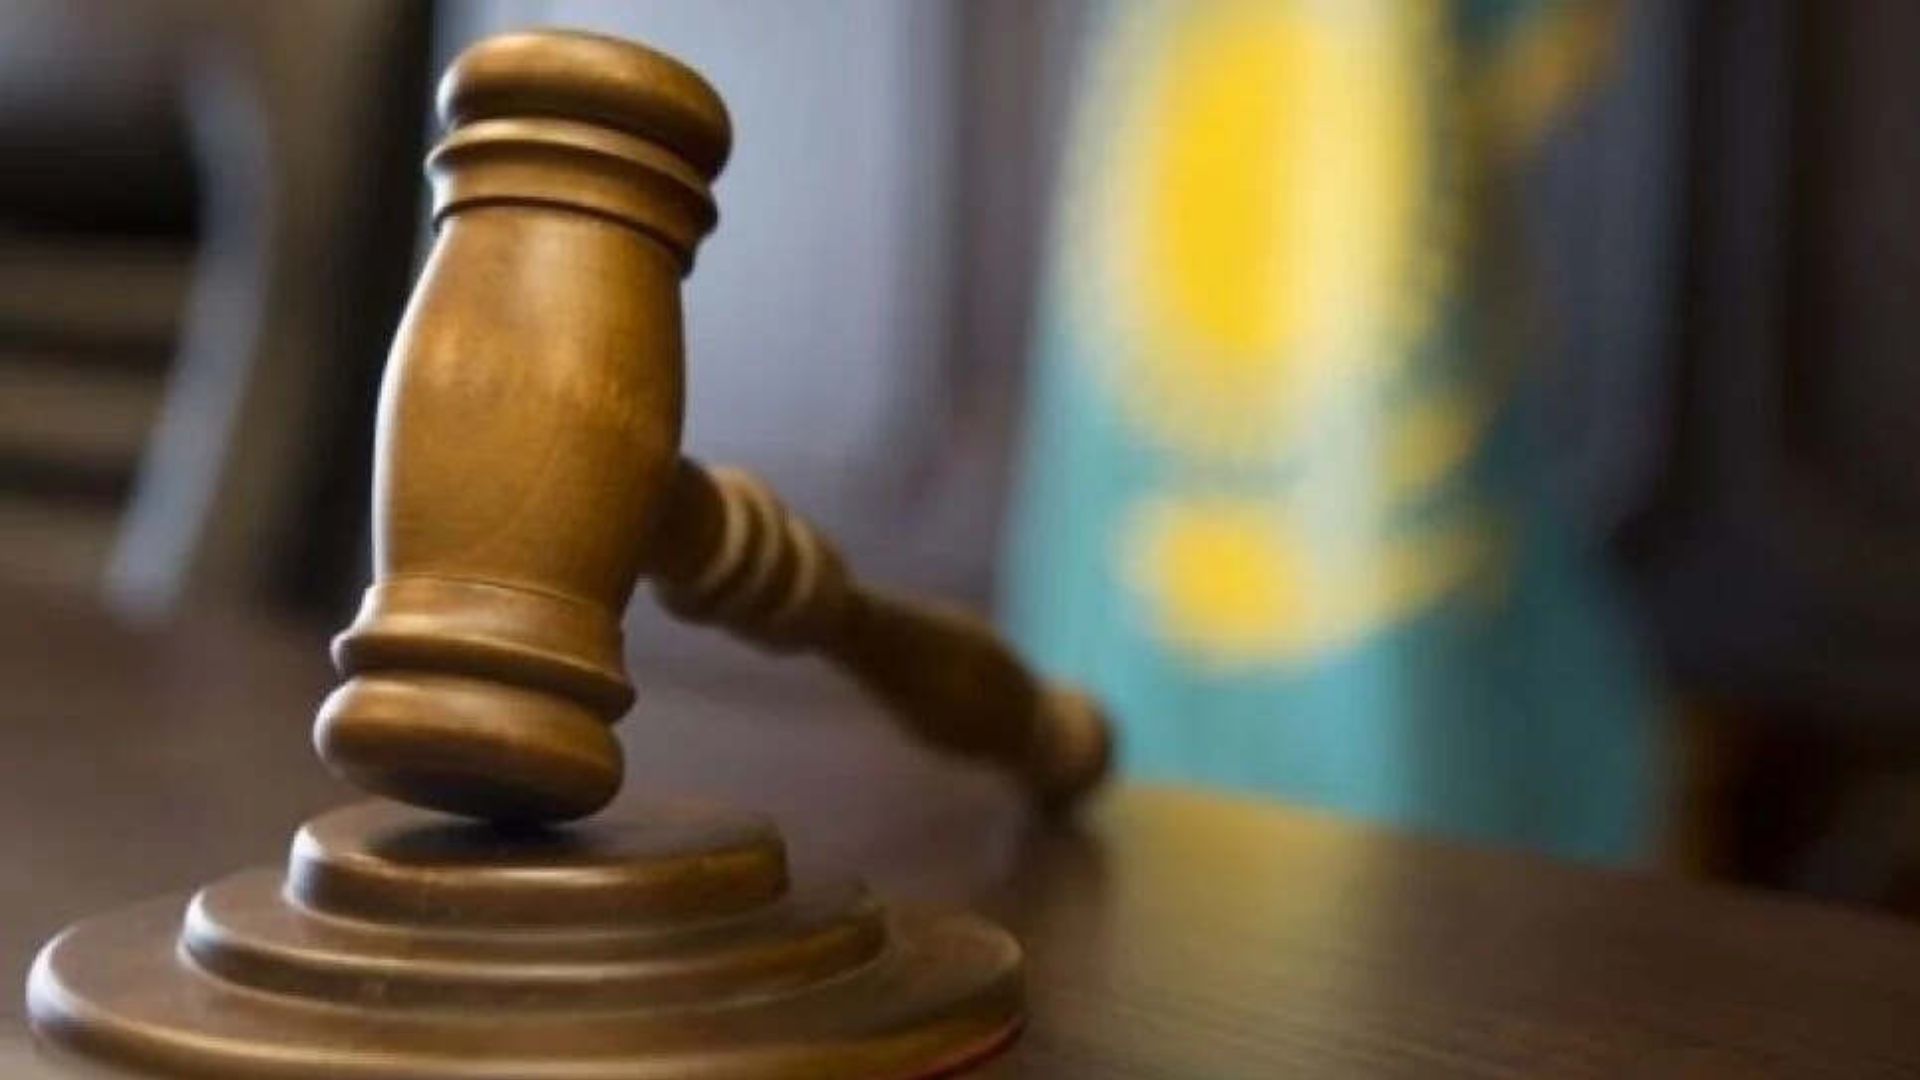 Иск замерзающих в своих квартирах астанчан отклонили в суде - Bizmedia.kz